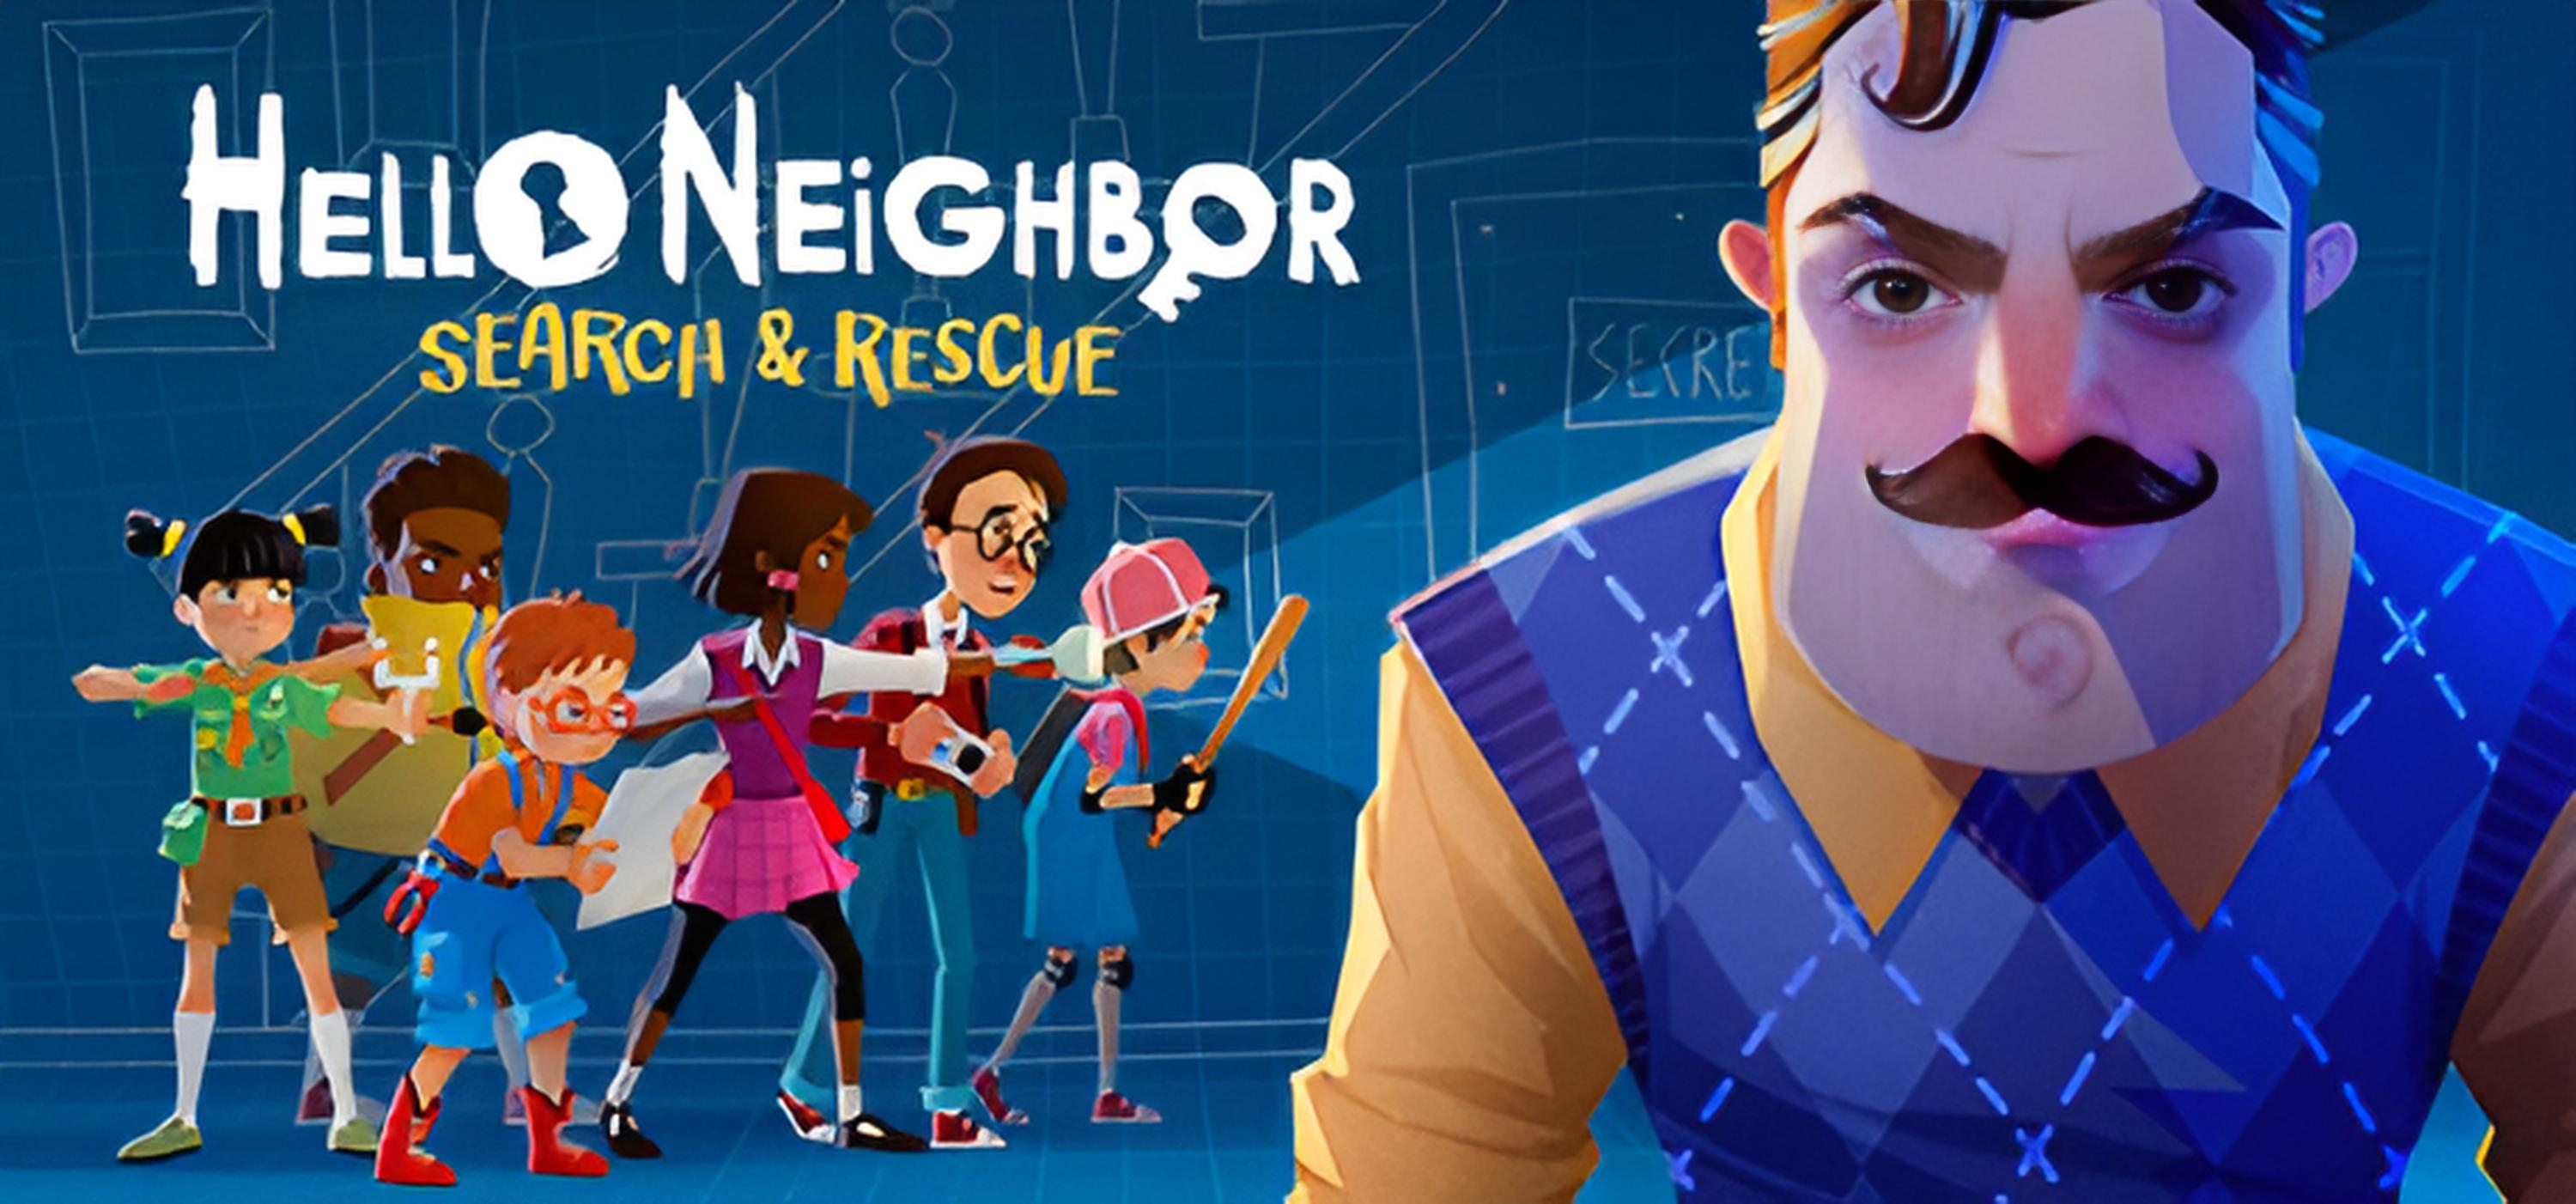 Обложка игры Hello Neighbor VR: Search and Rescue